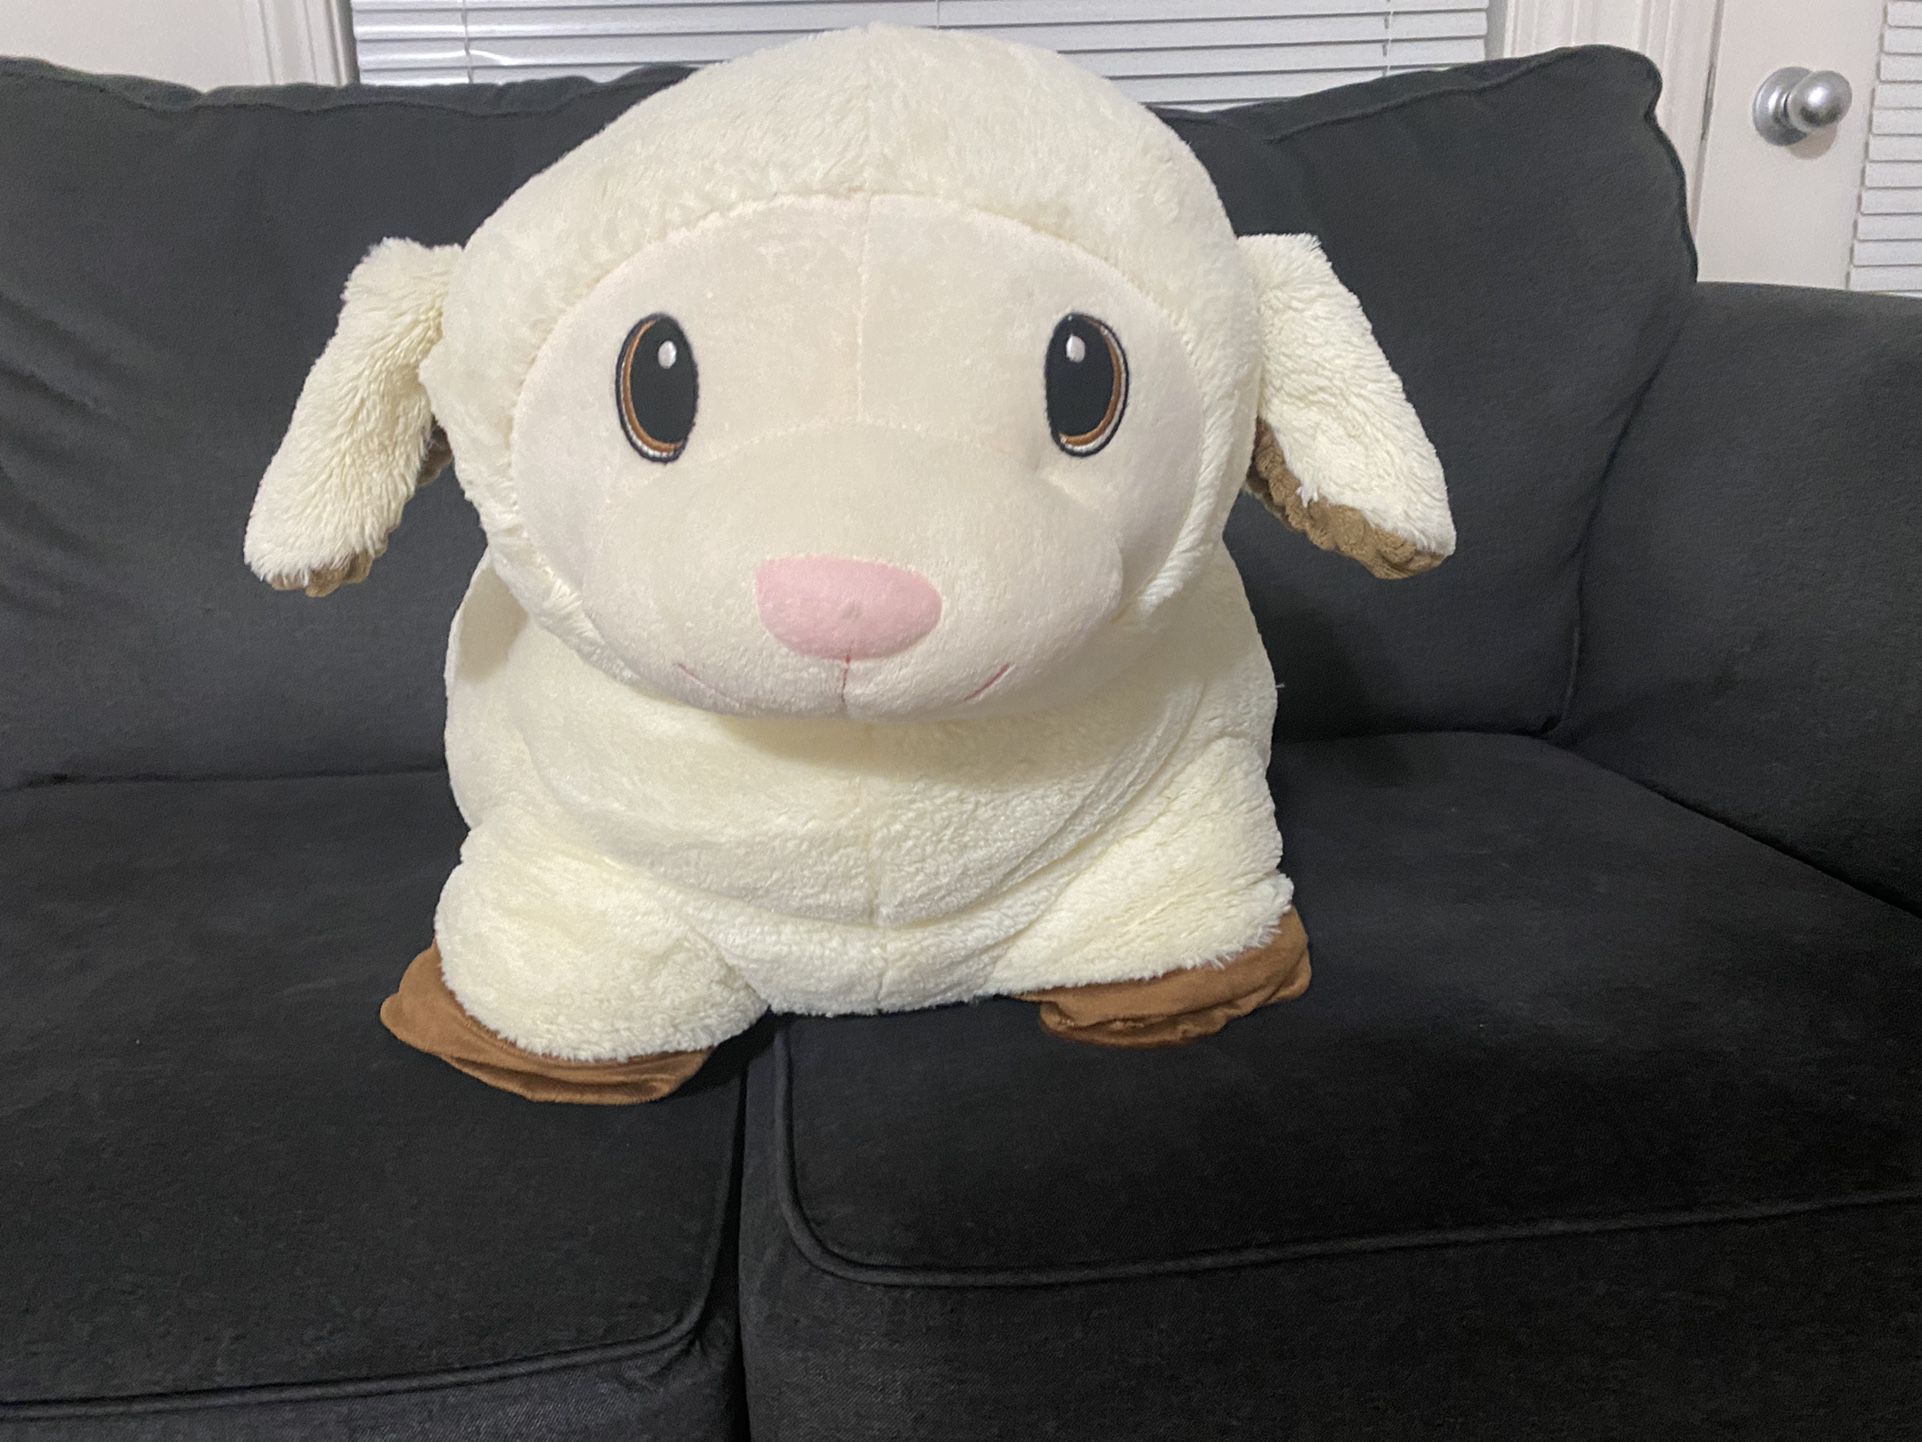 Sheep Stuffed Animal 